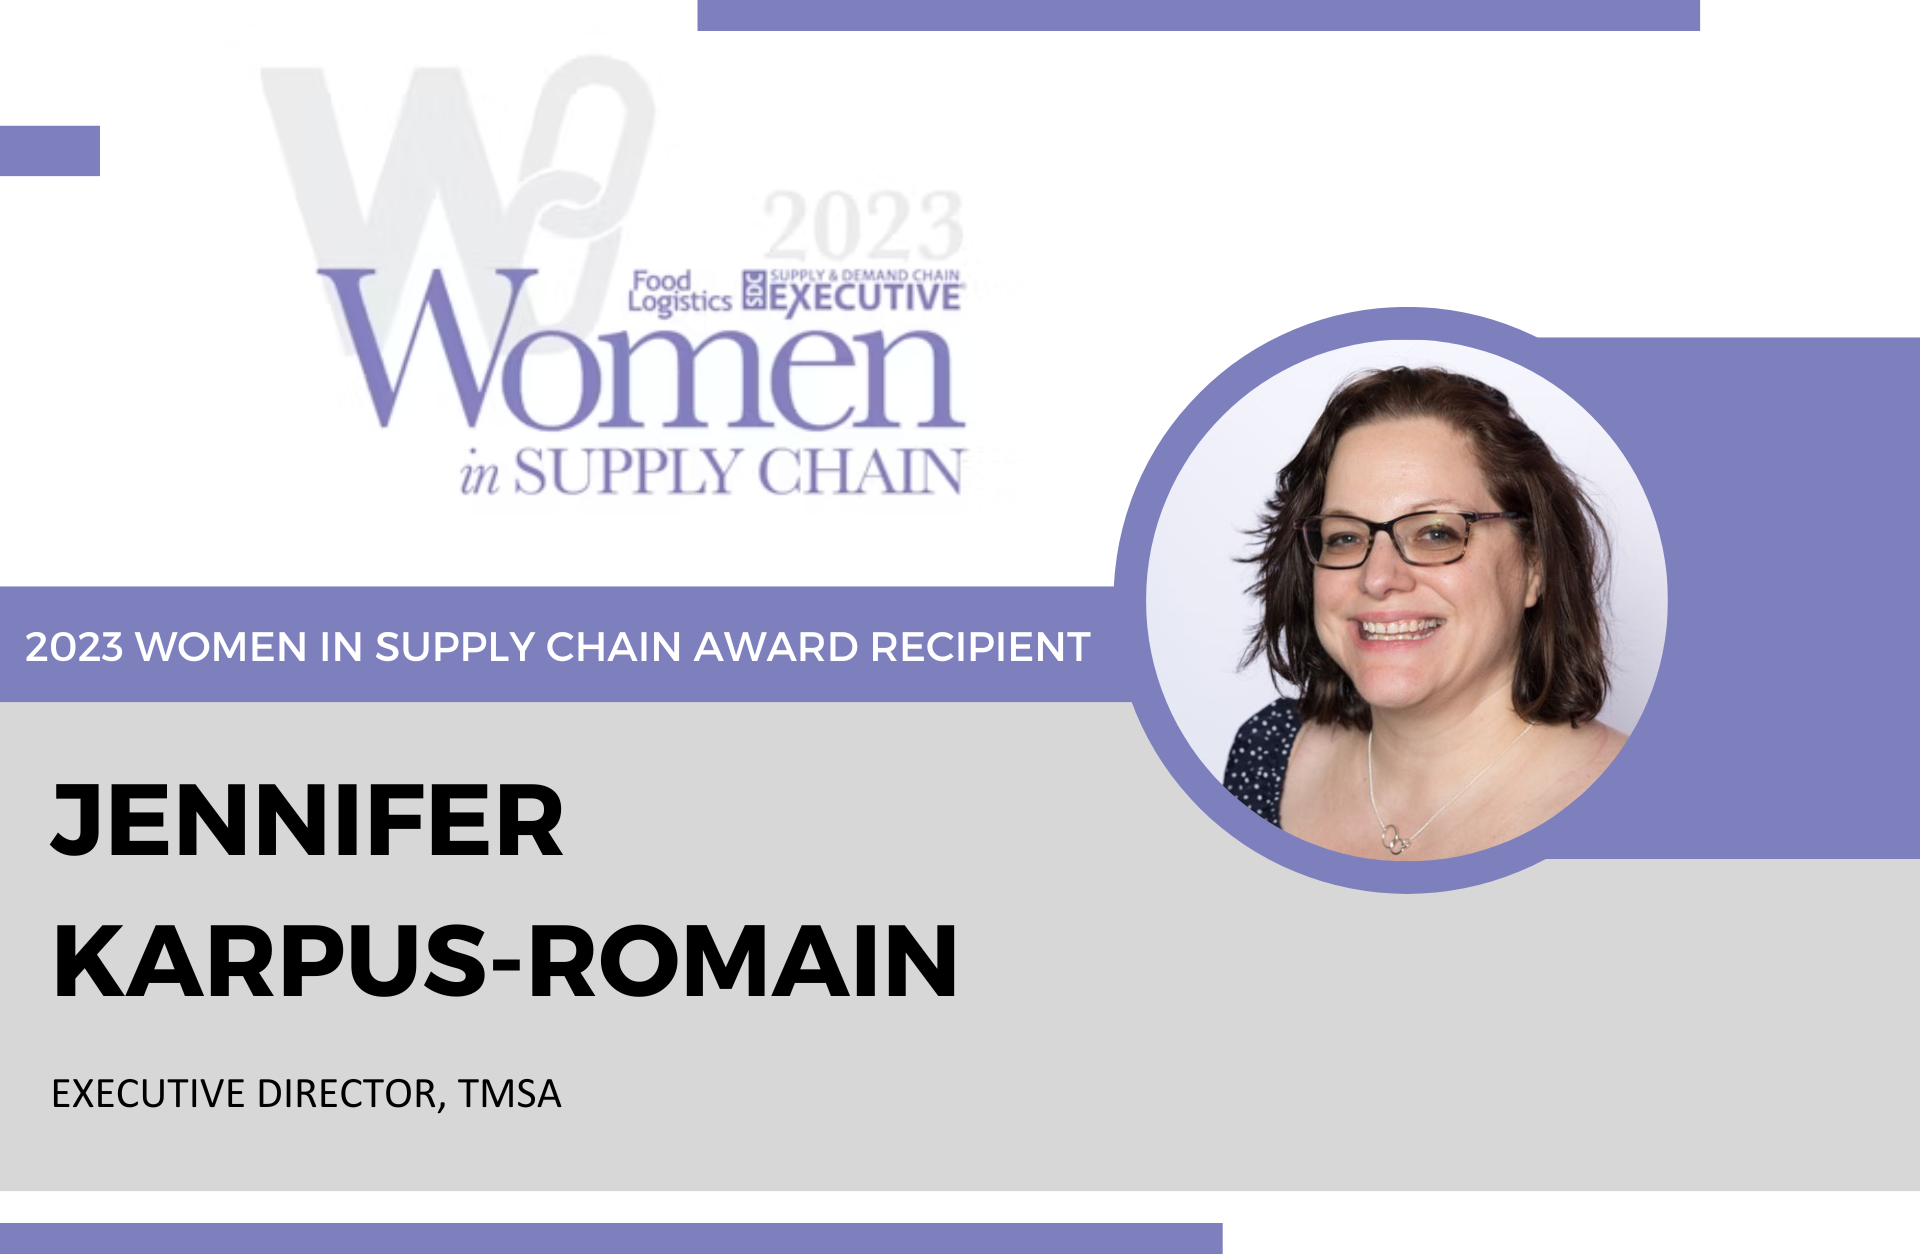 TMSA's Jennifer Karpus-Romain named one of the winners of this year’s Women in Supply Chain Award.